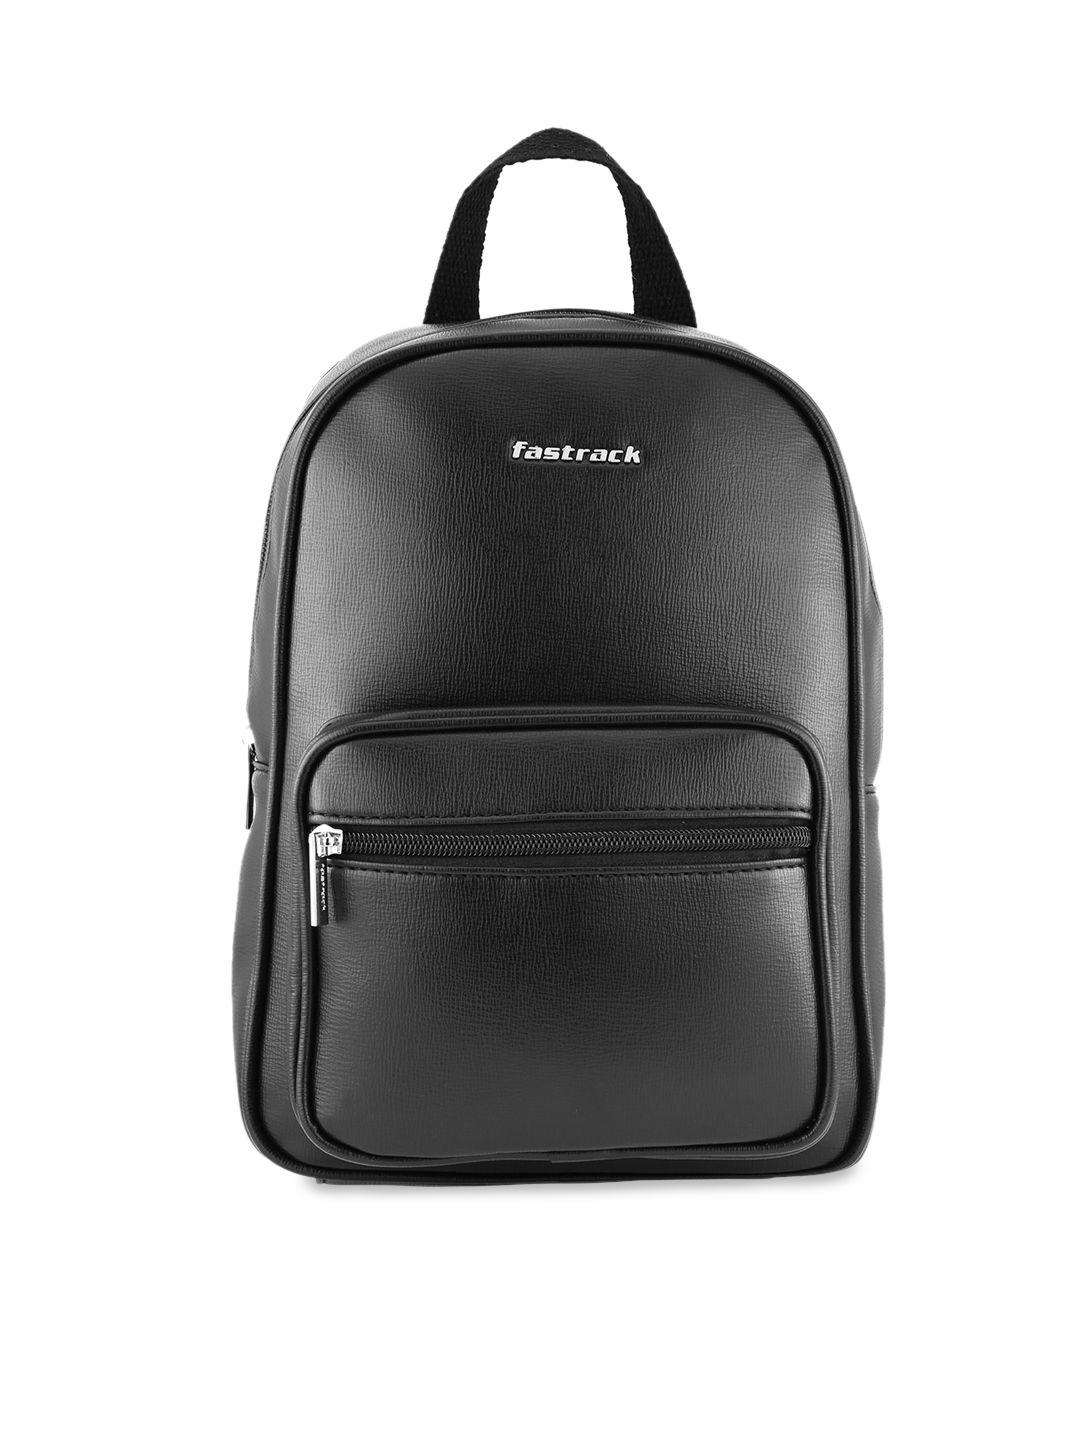 fastrack women medium size textured backpack